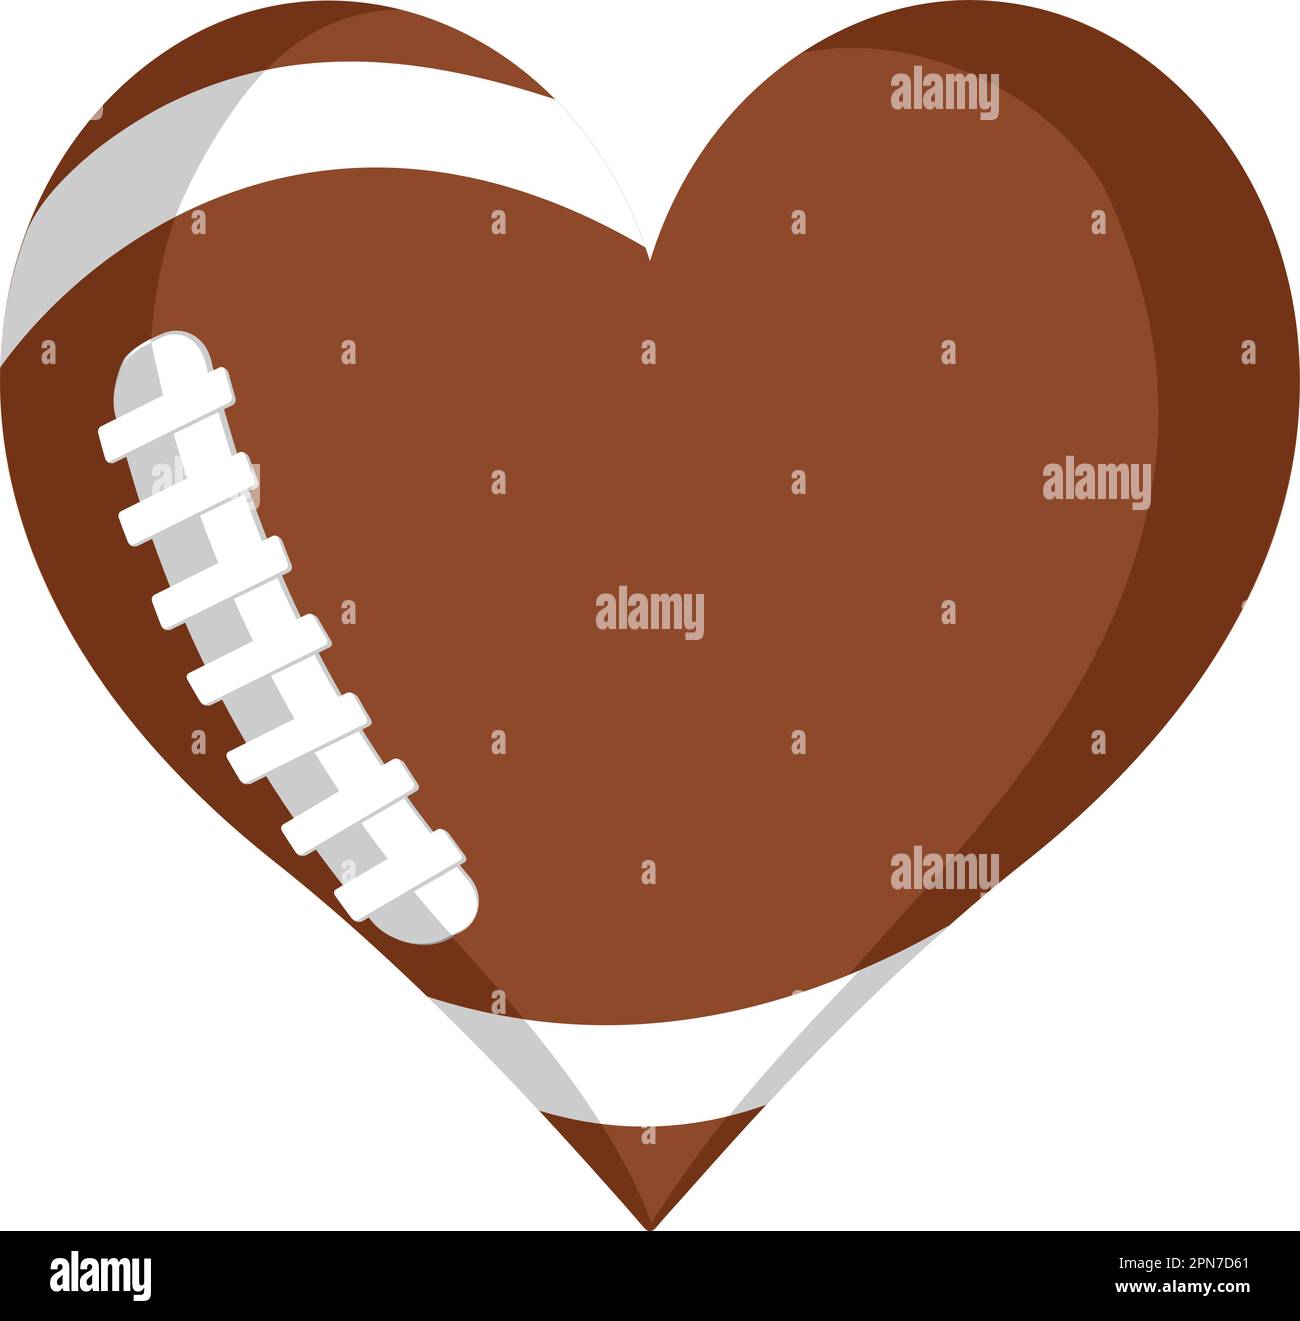 American Football Ball Heart Shape Concept Stock Vector